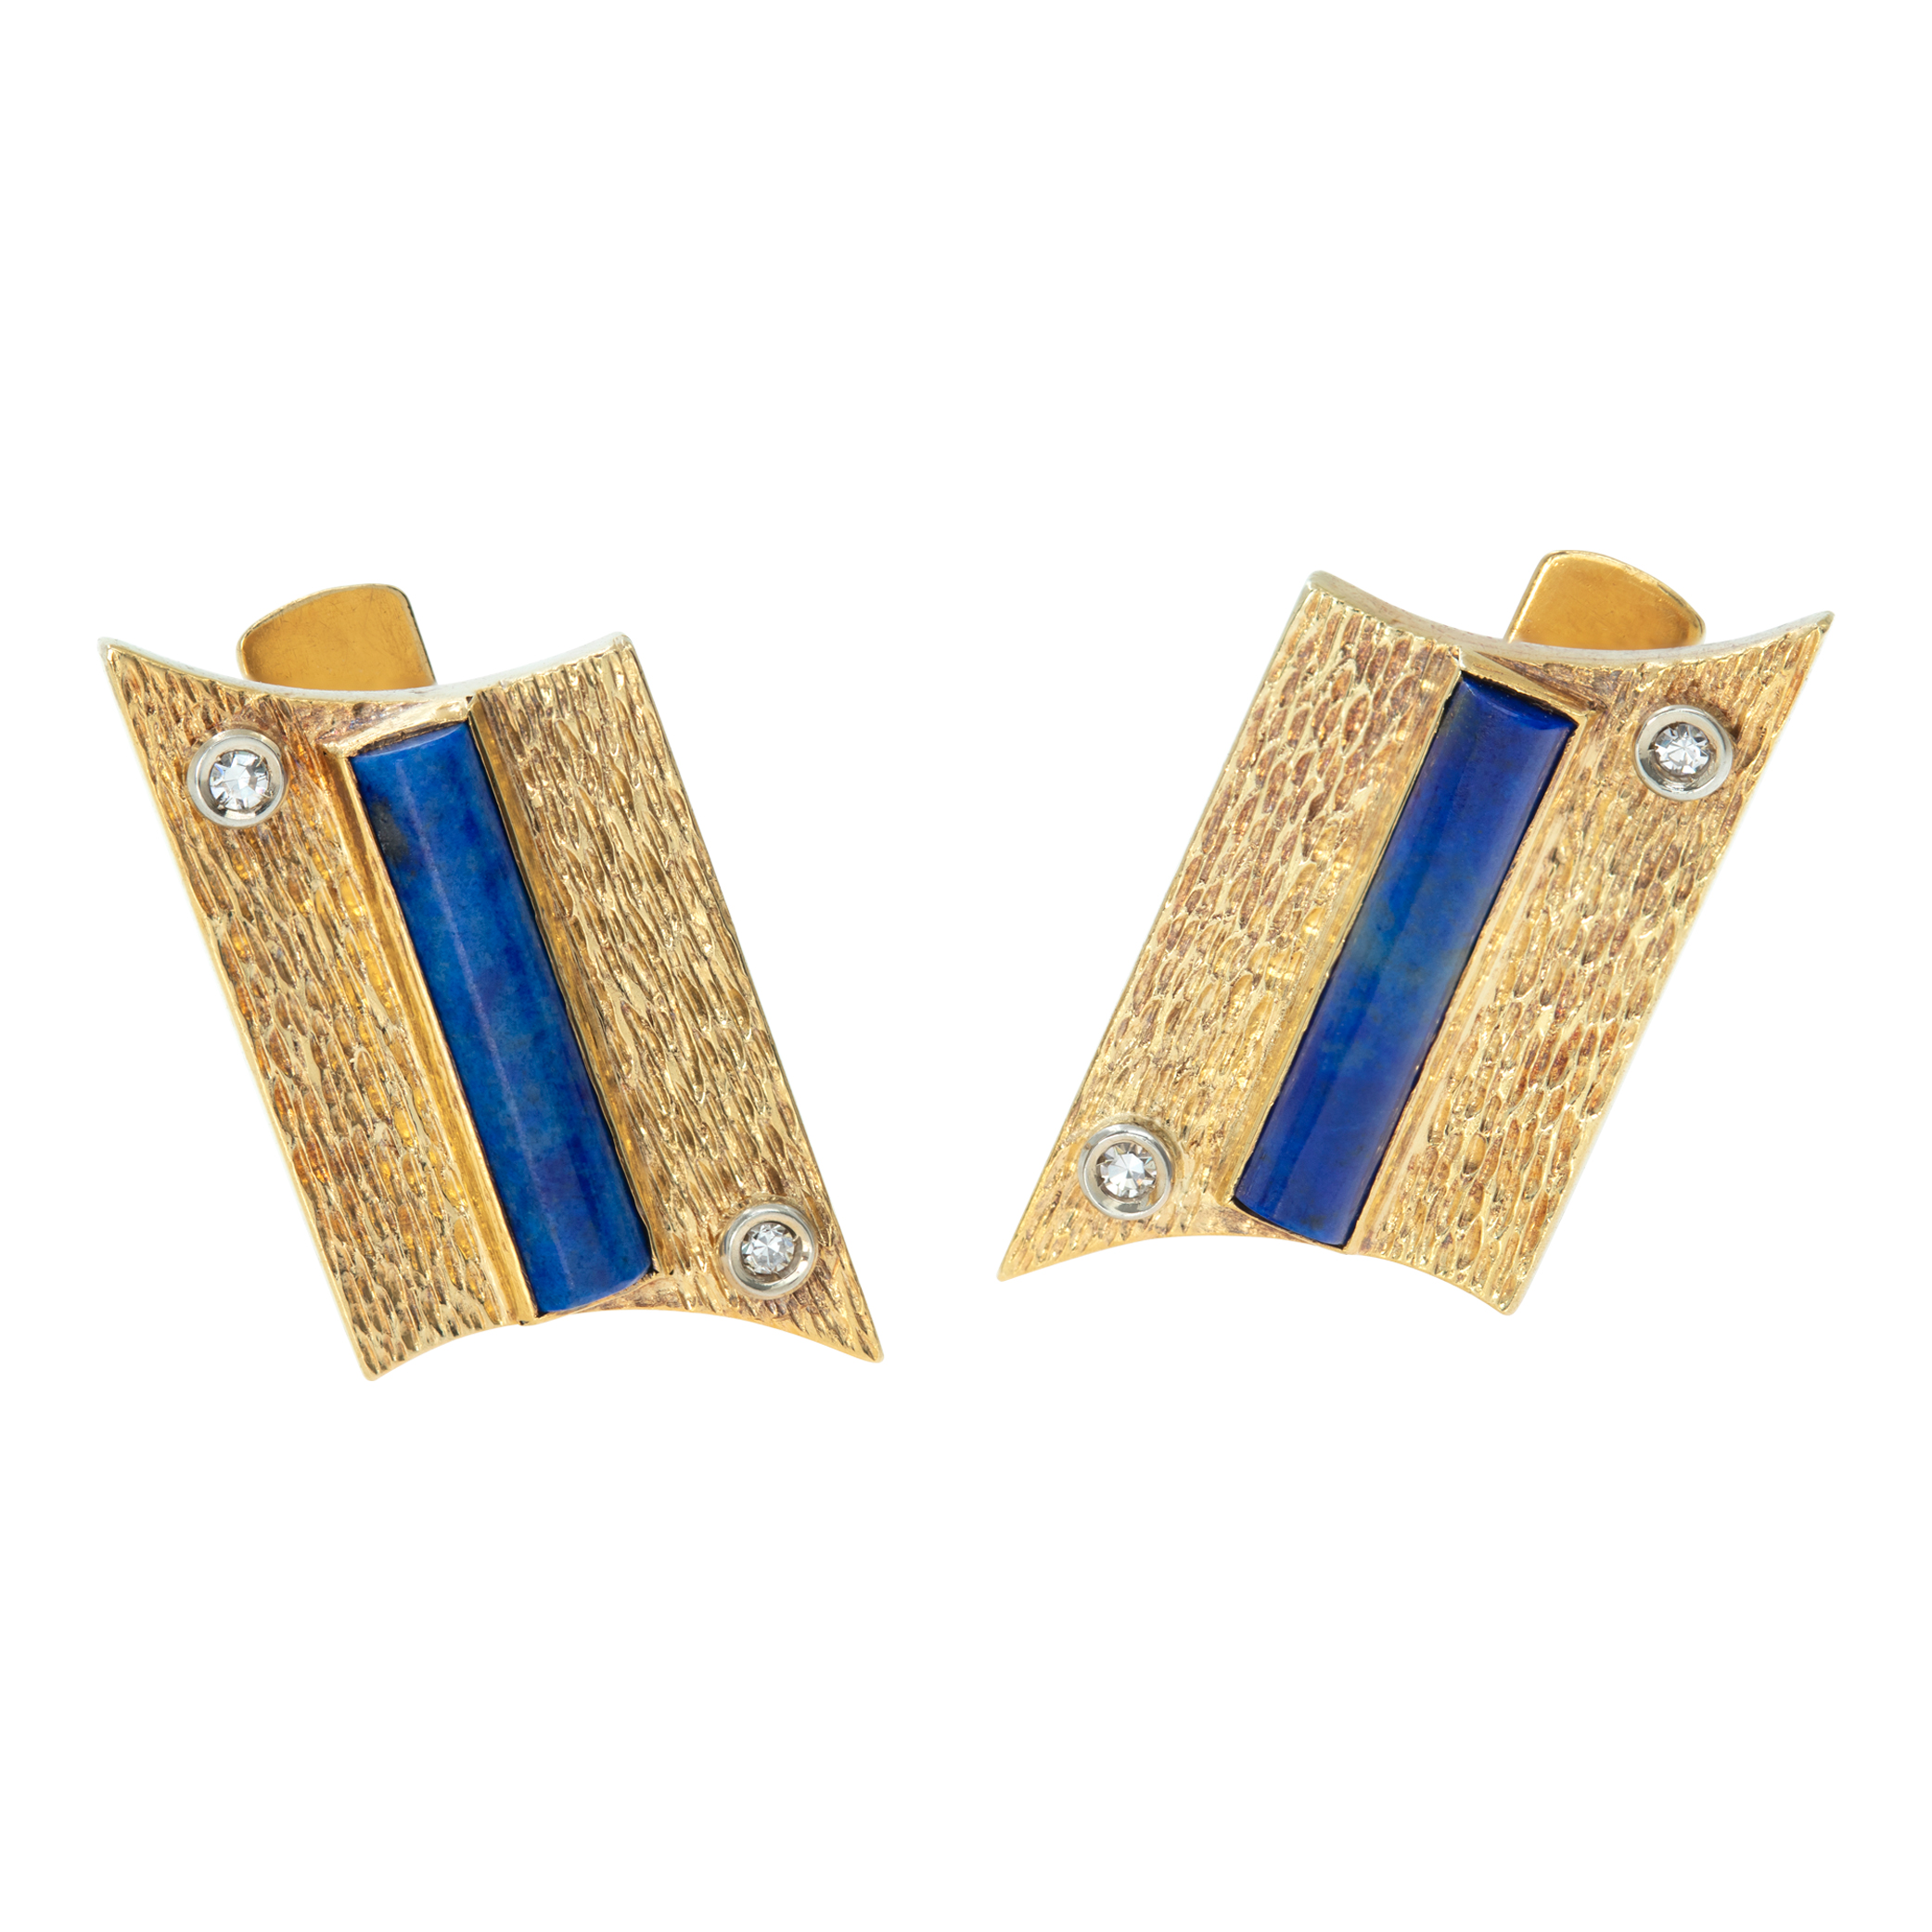 18k cufflinks with diamonds and lapis lazuli